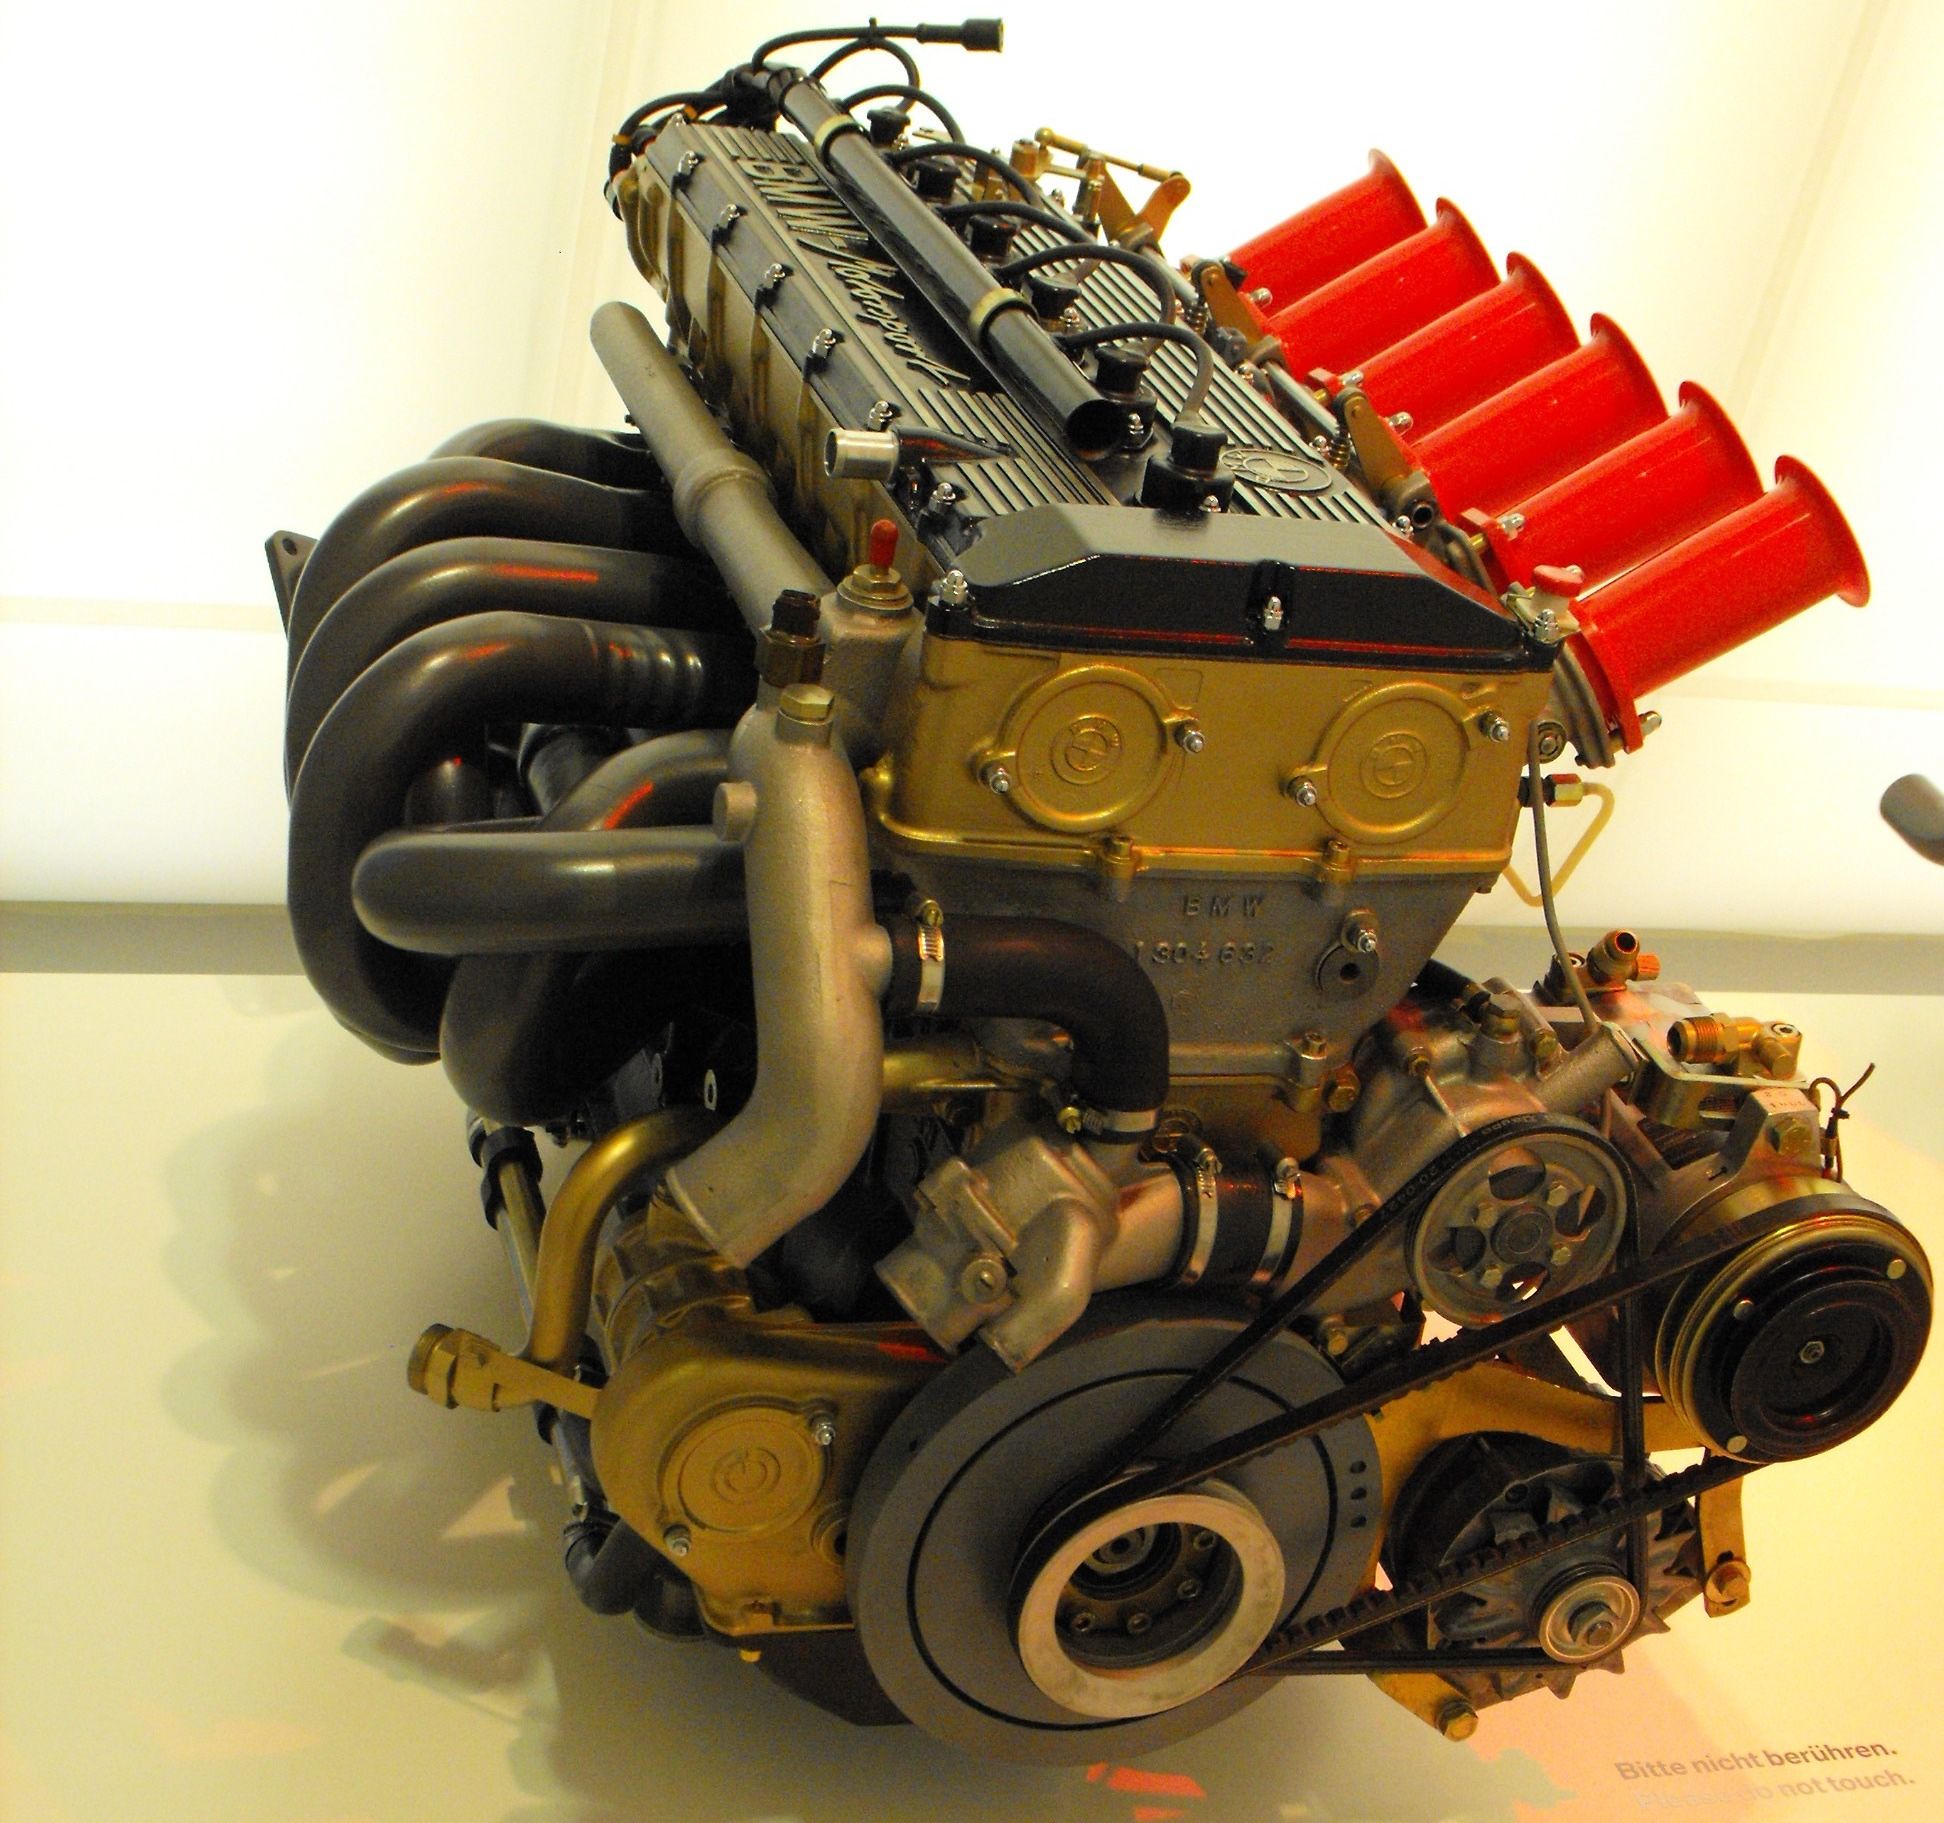 BMW M88 engine